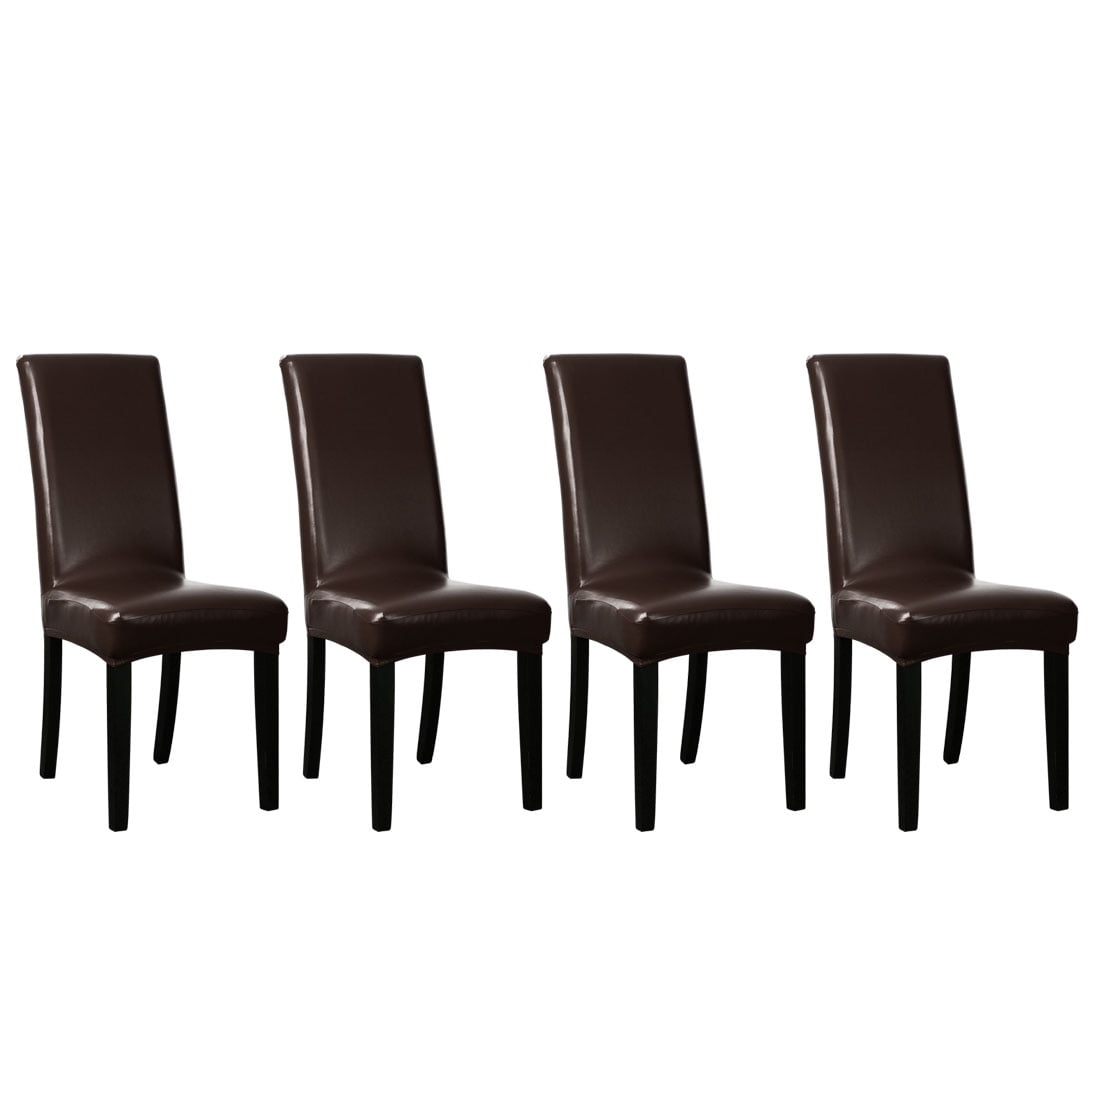 4pc Pu Leather Stretch Dining Chair Seat Cover Slipcovers Dark Brown Walmart Com Walmart Com